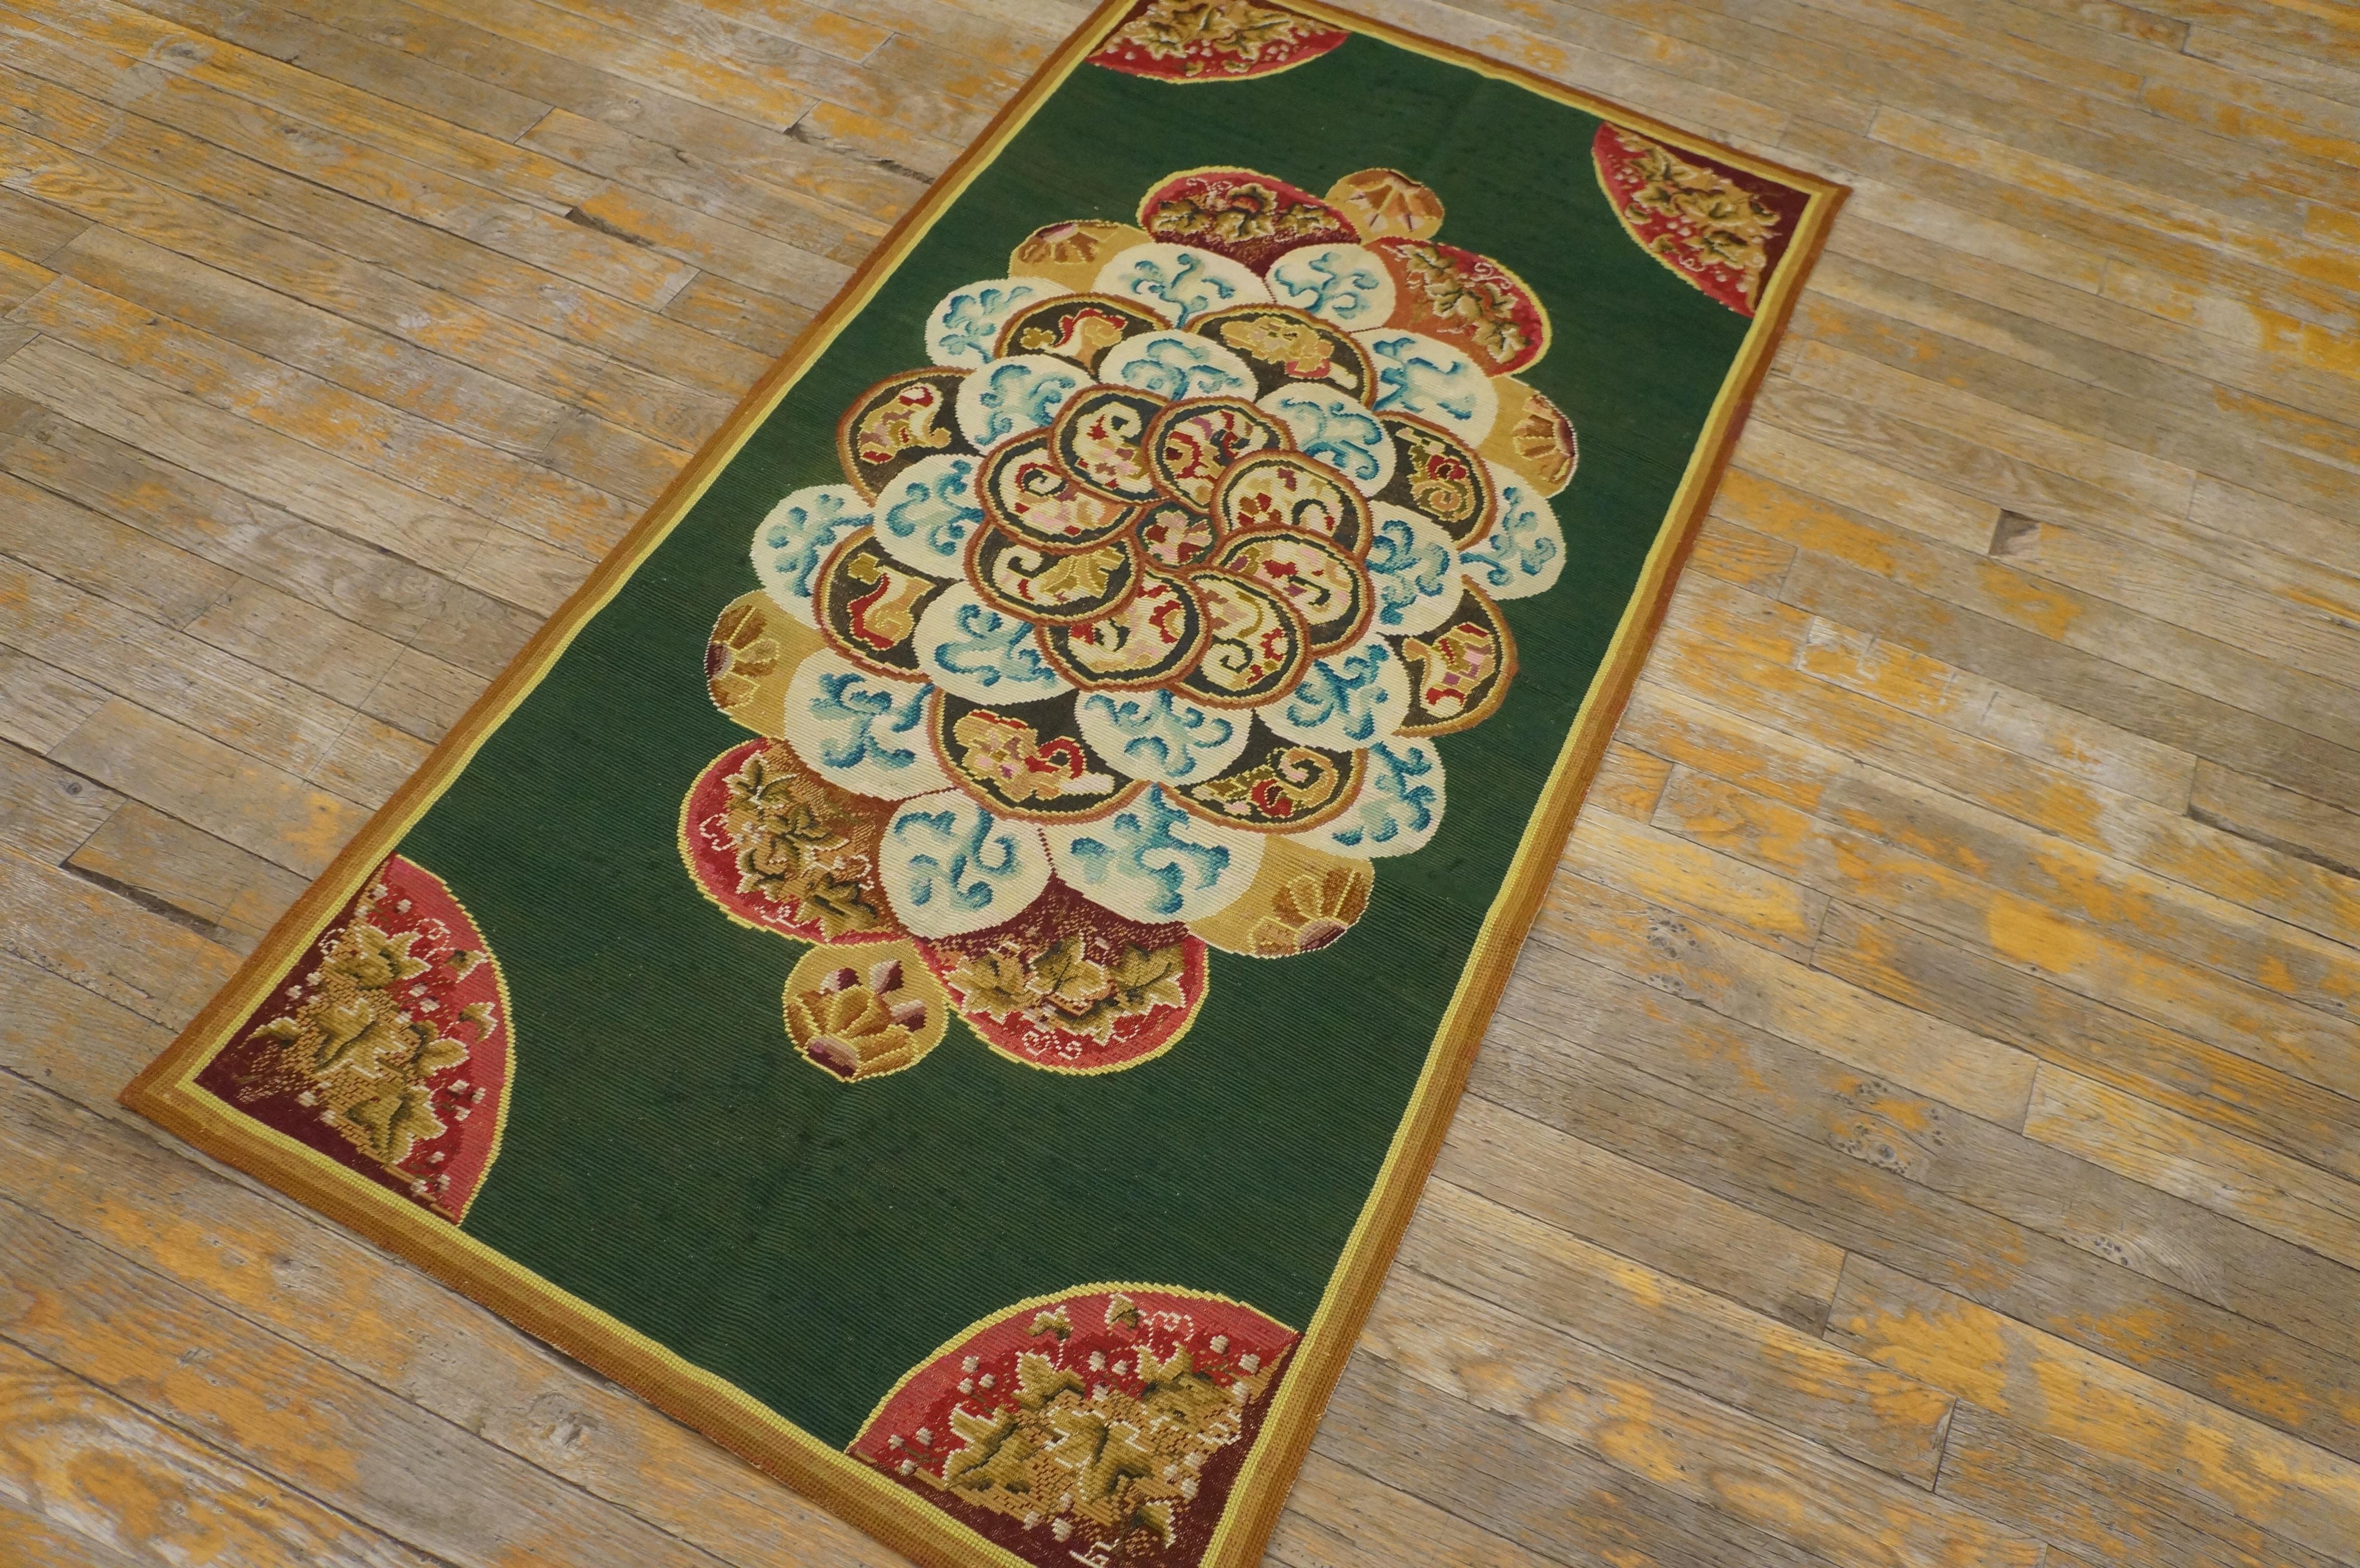 Antique European needlepoint rug, size: 2'1